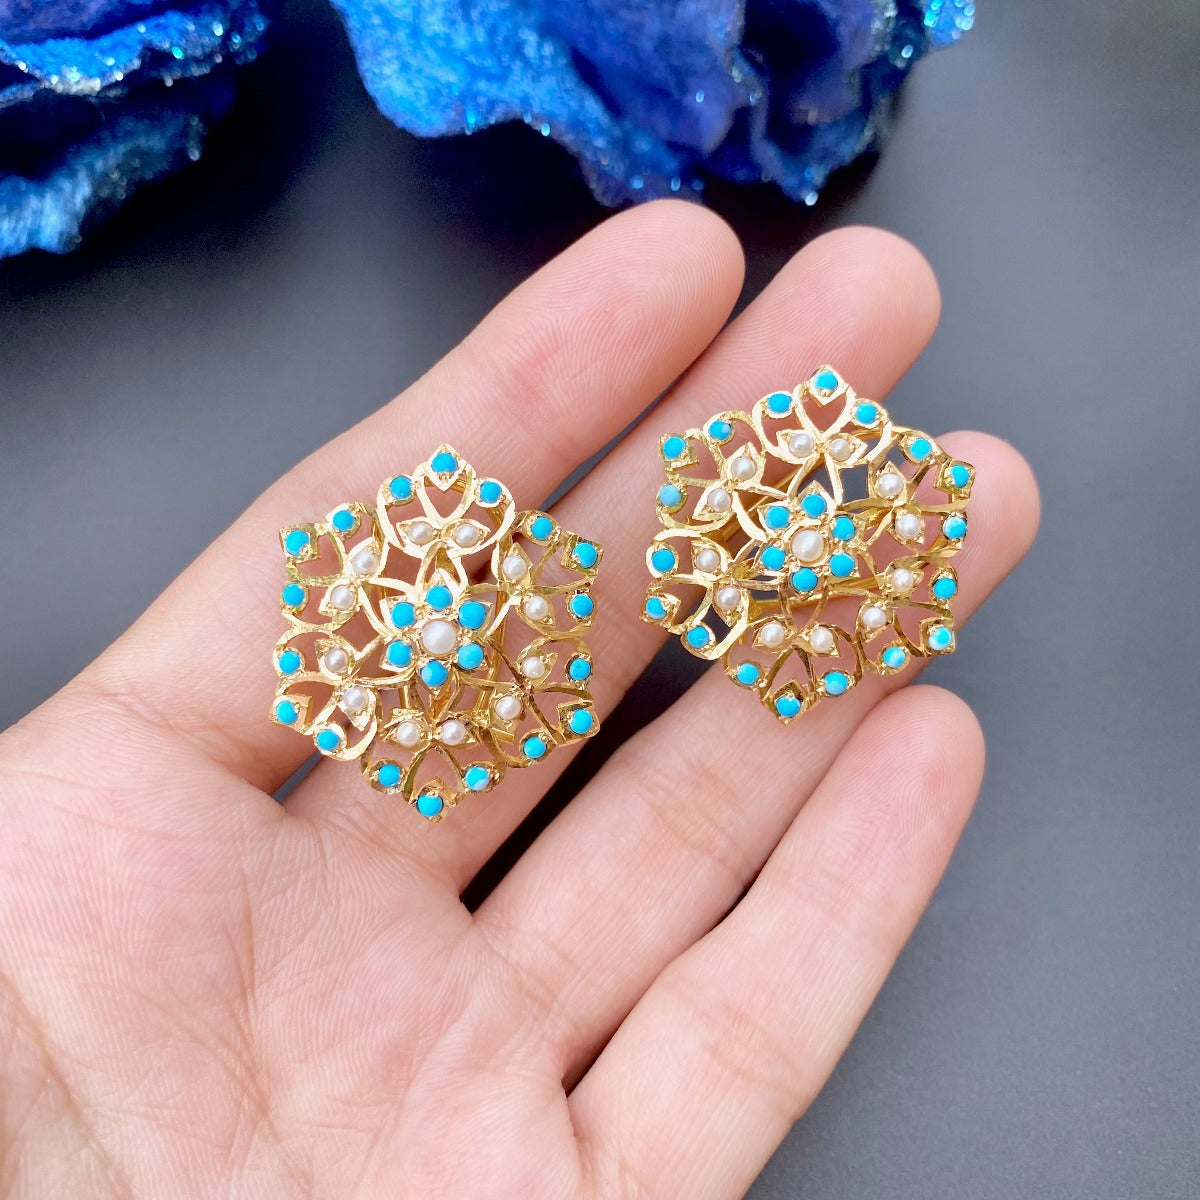 Victorian Edwardian Inspired Turquoise Stud Earrings